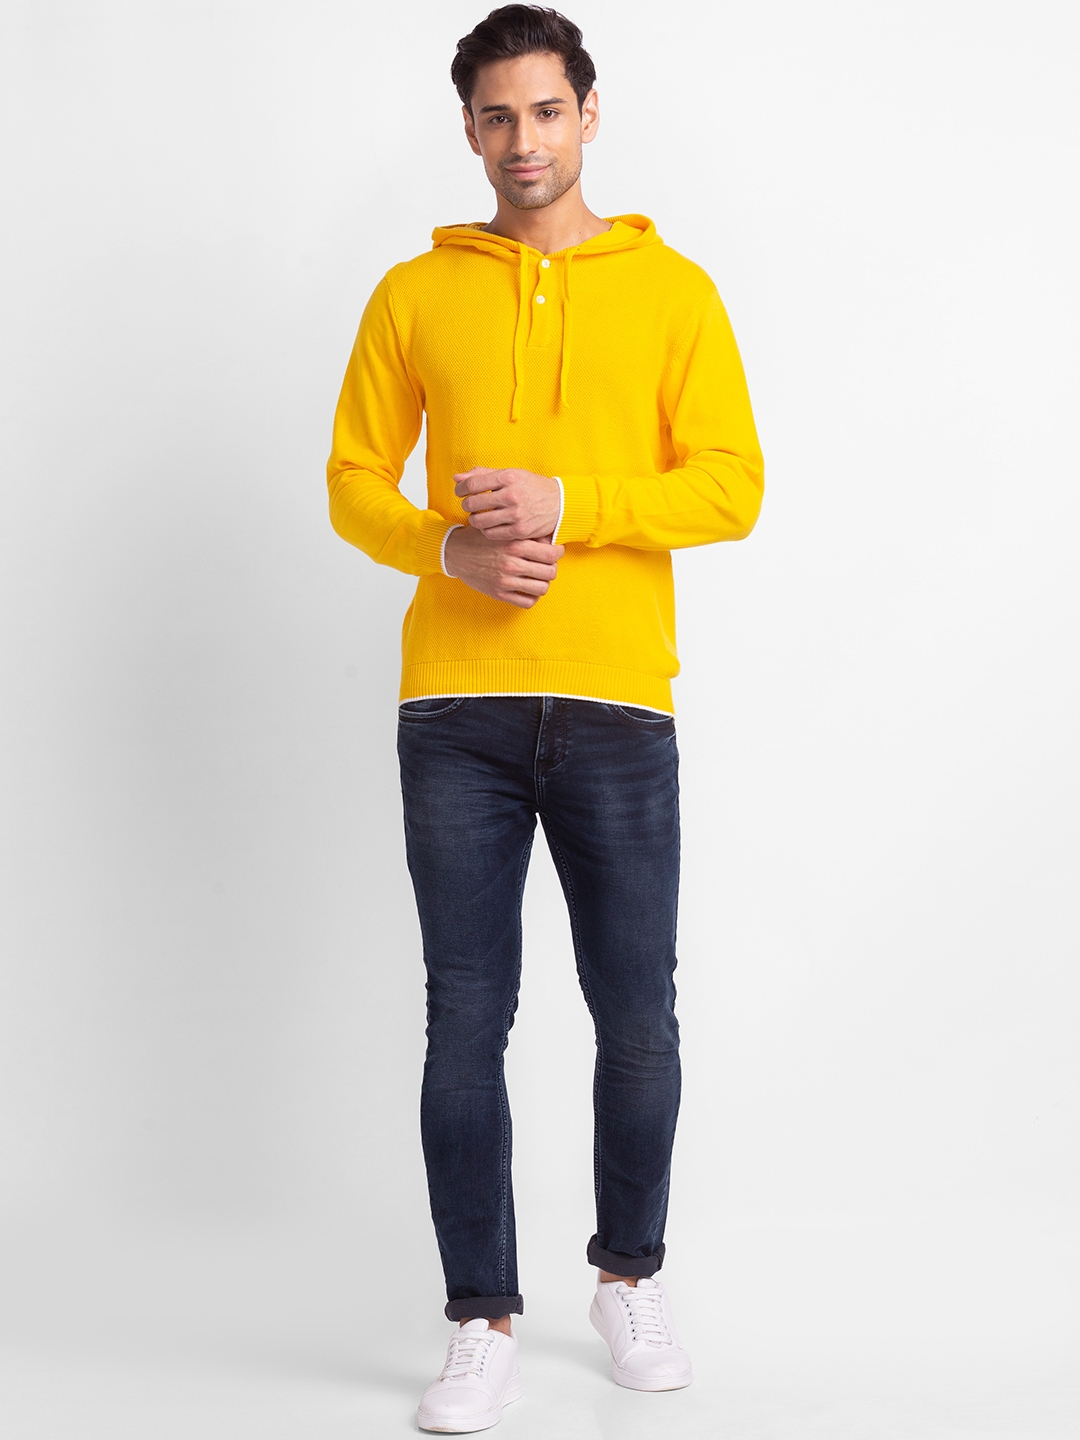 globus | Globus Yellow Self Design Tshirt